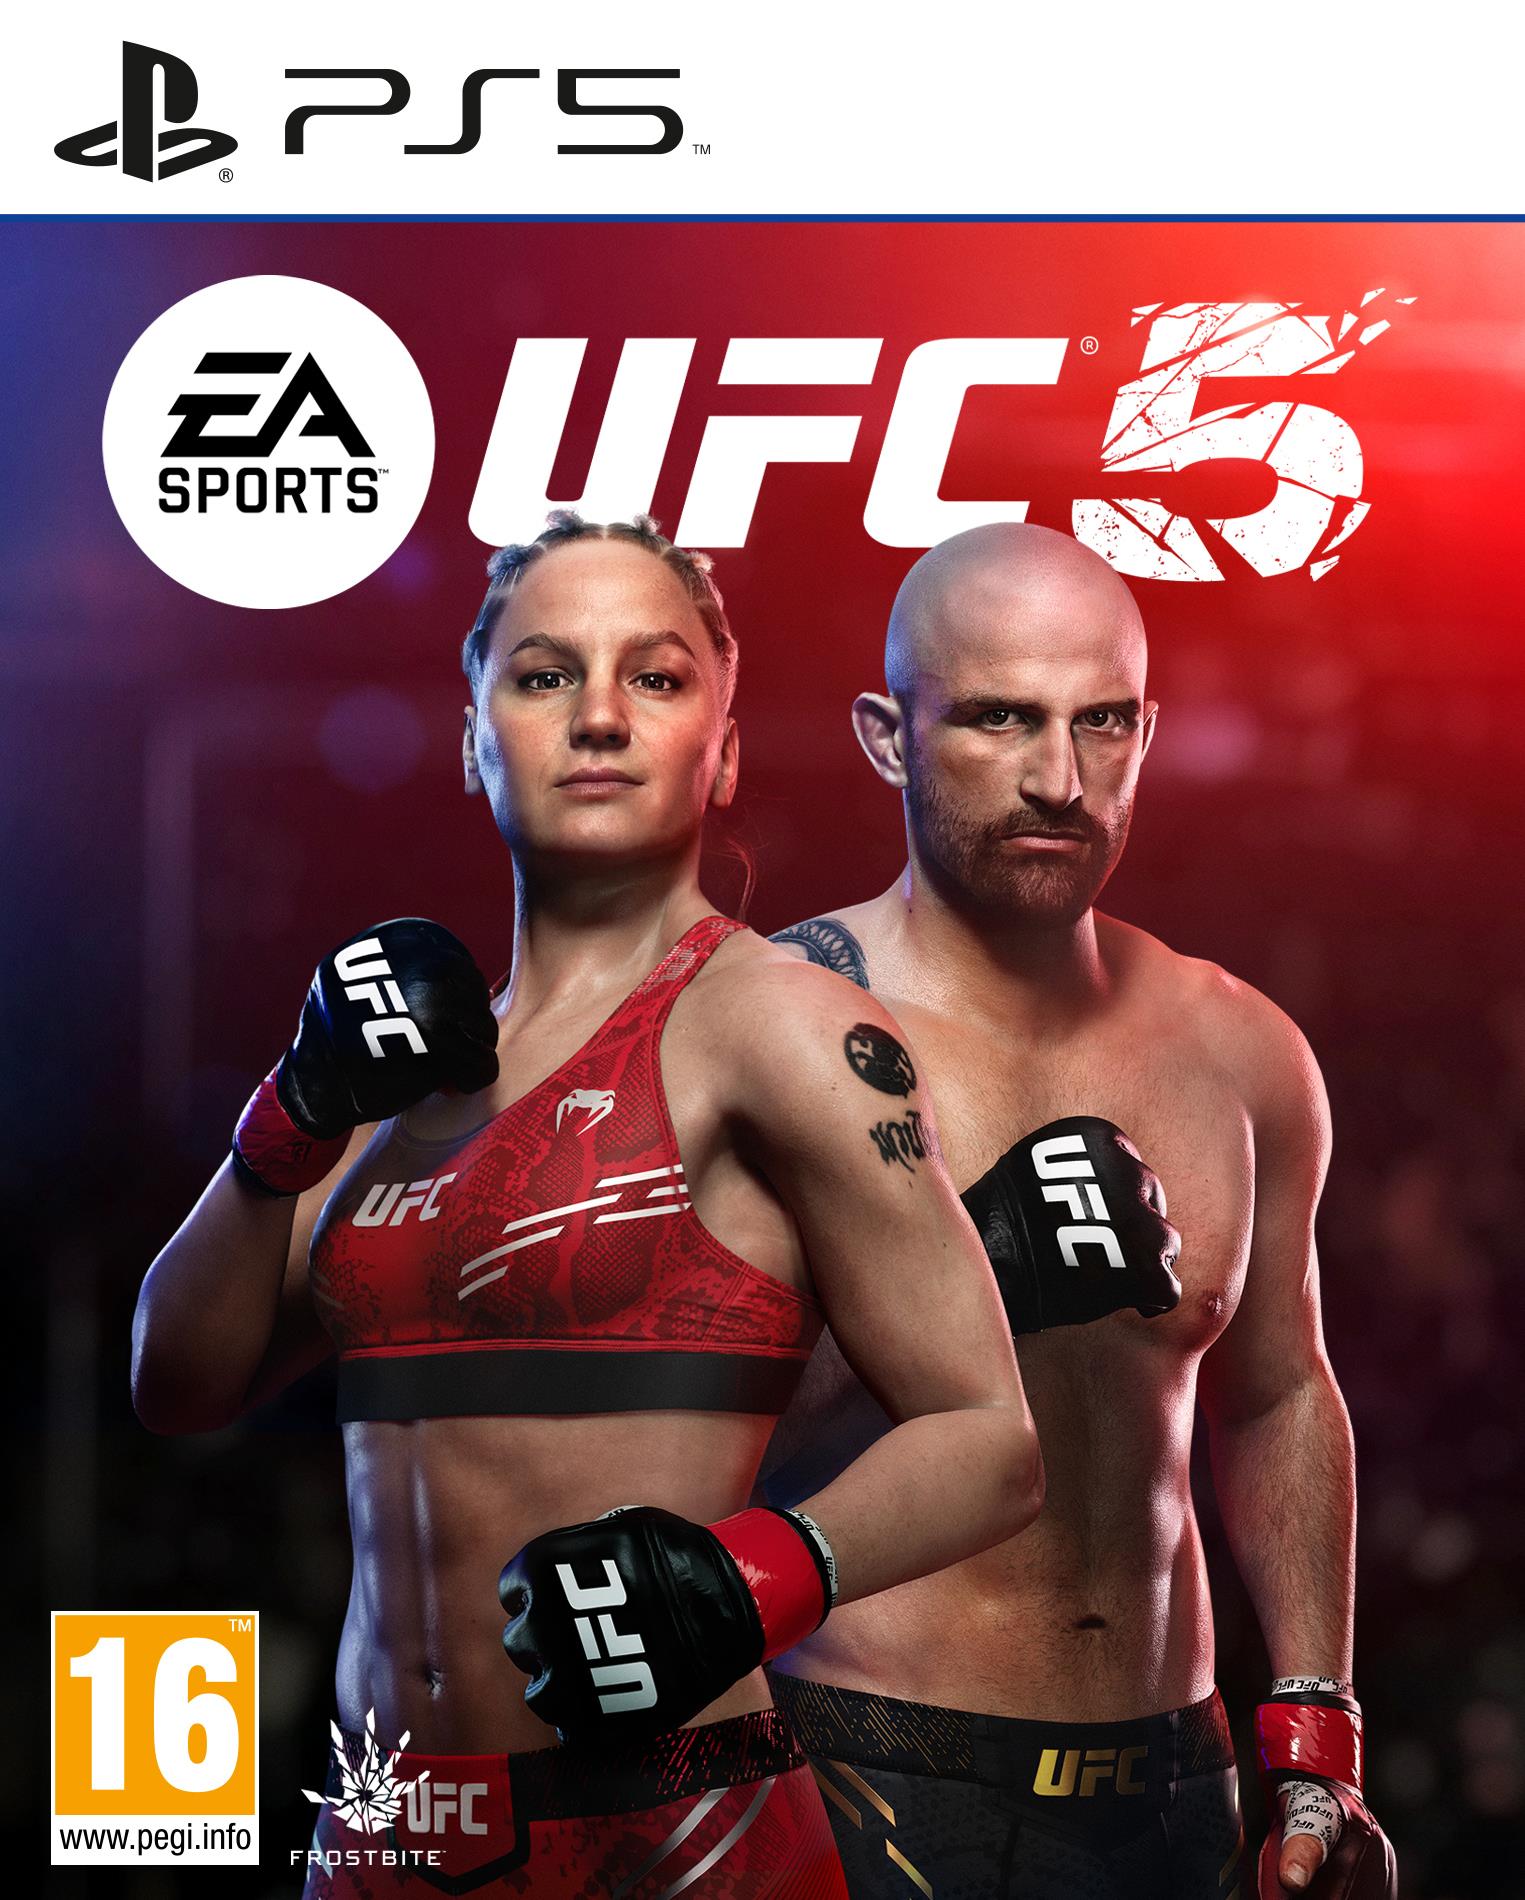 Electronic Arts Videogioco UFC